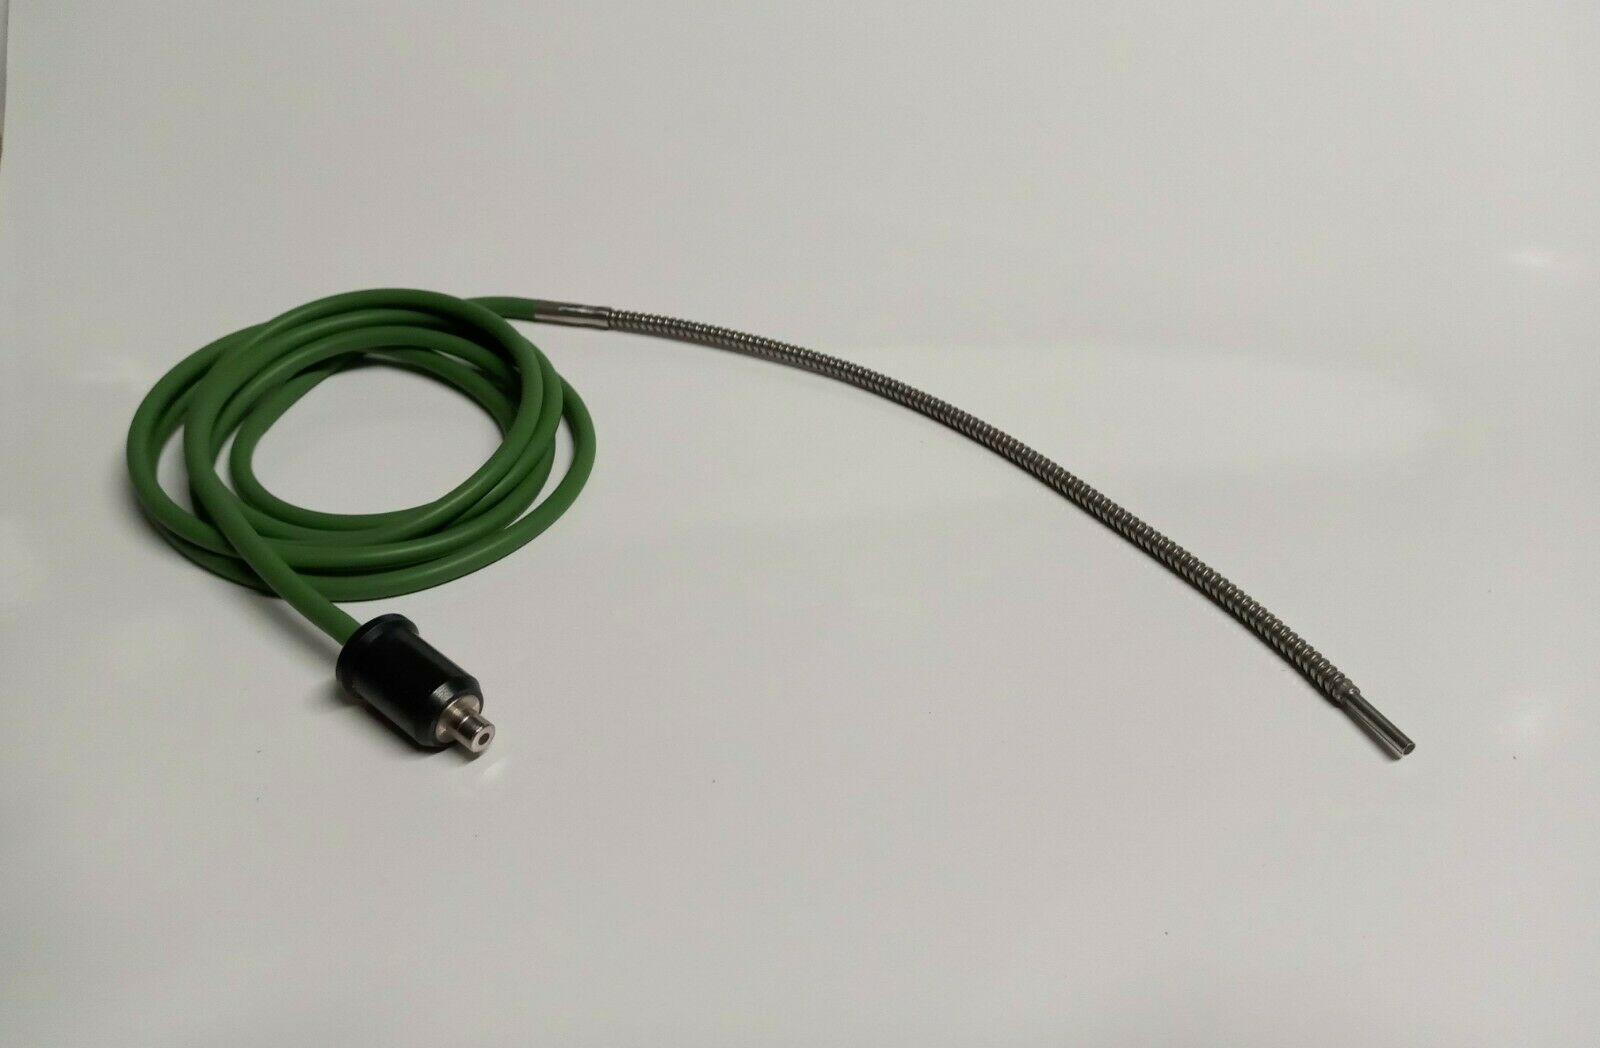 Surgical Fiber Optic Light Cable 6 Feet Long Flexible Tip